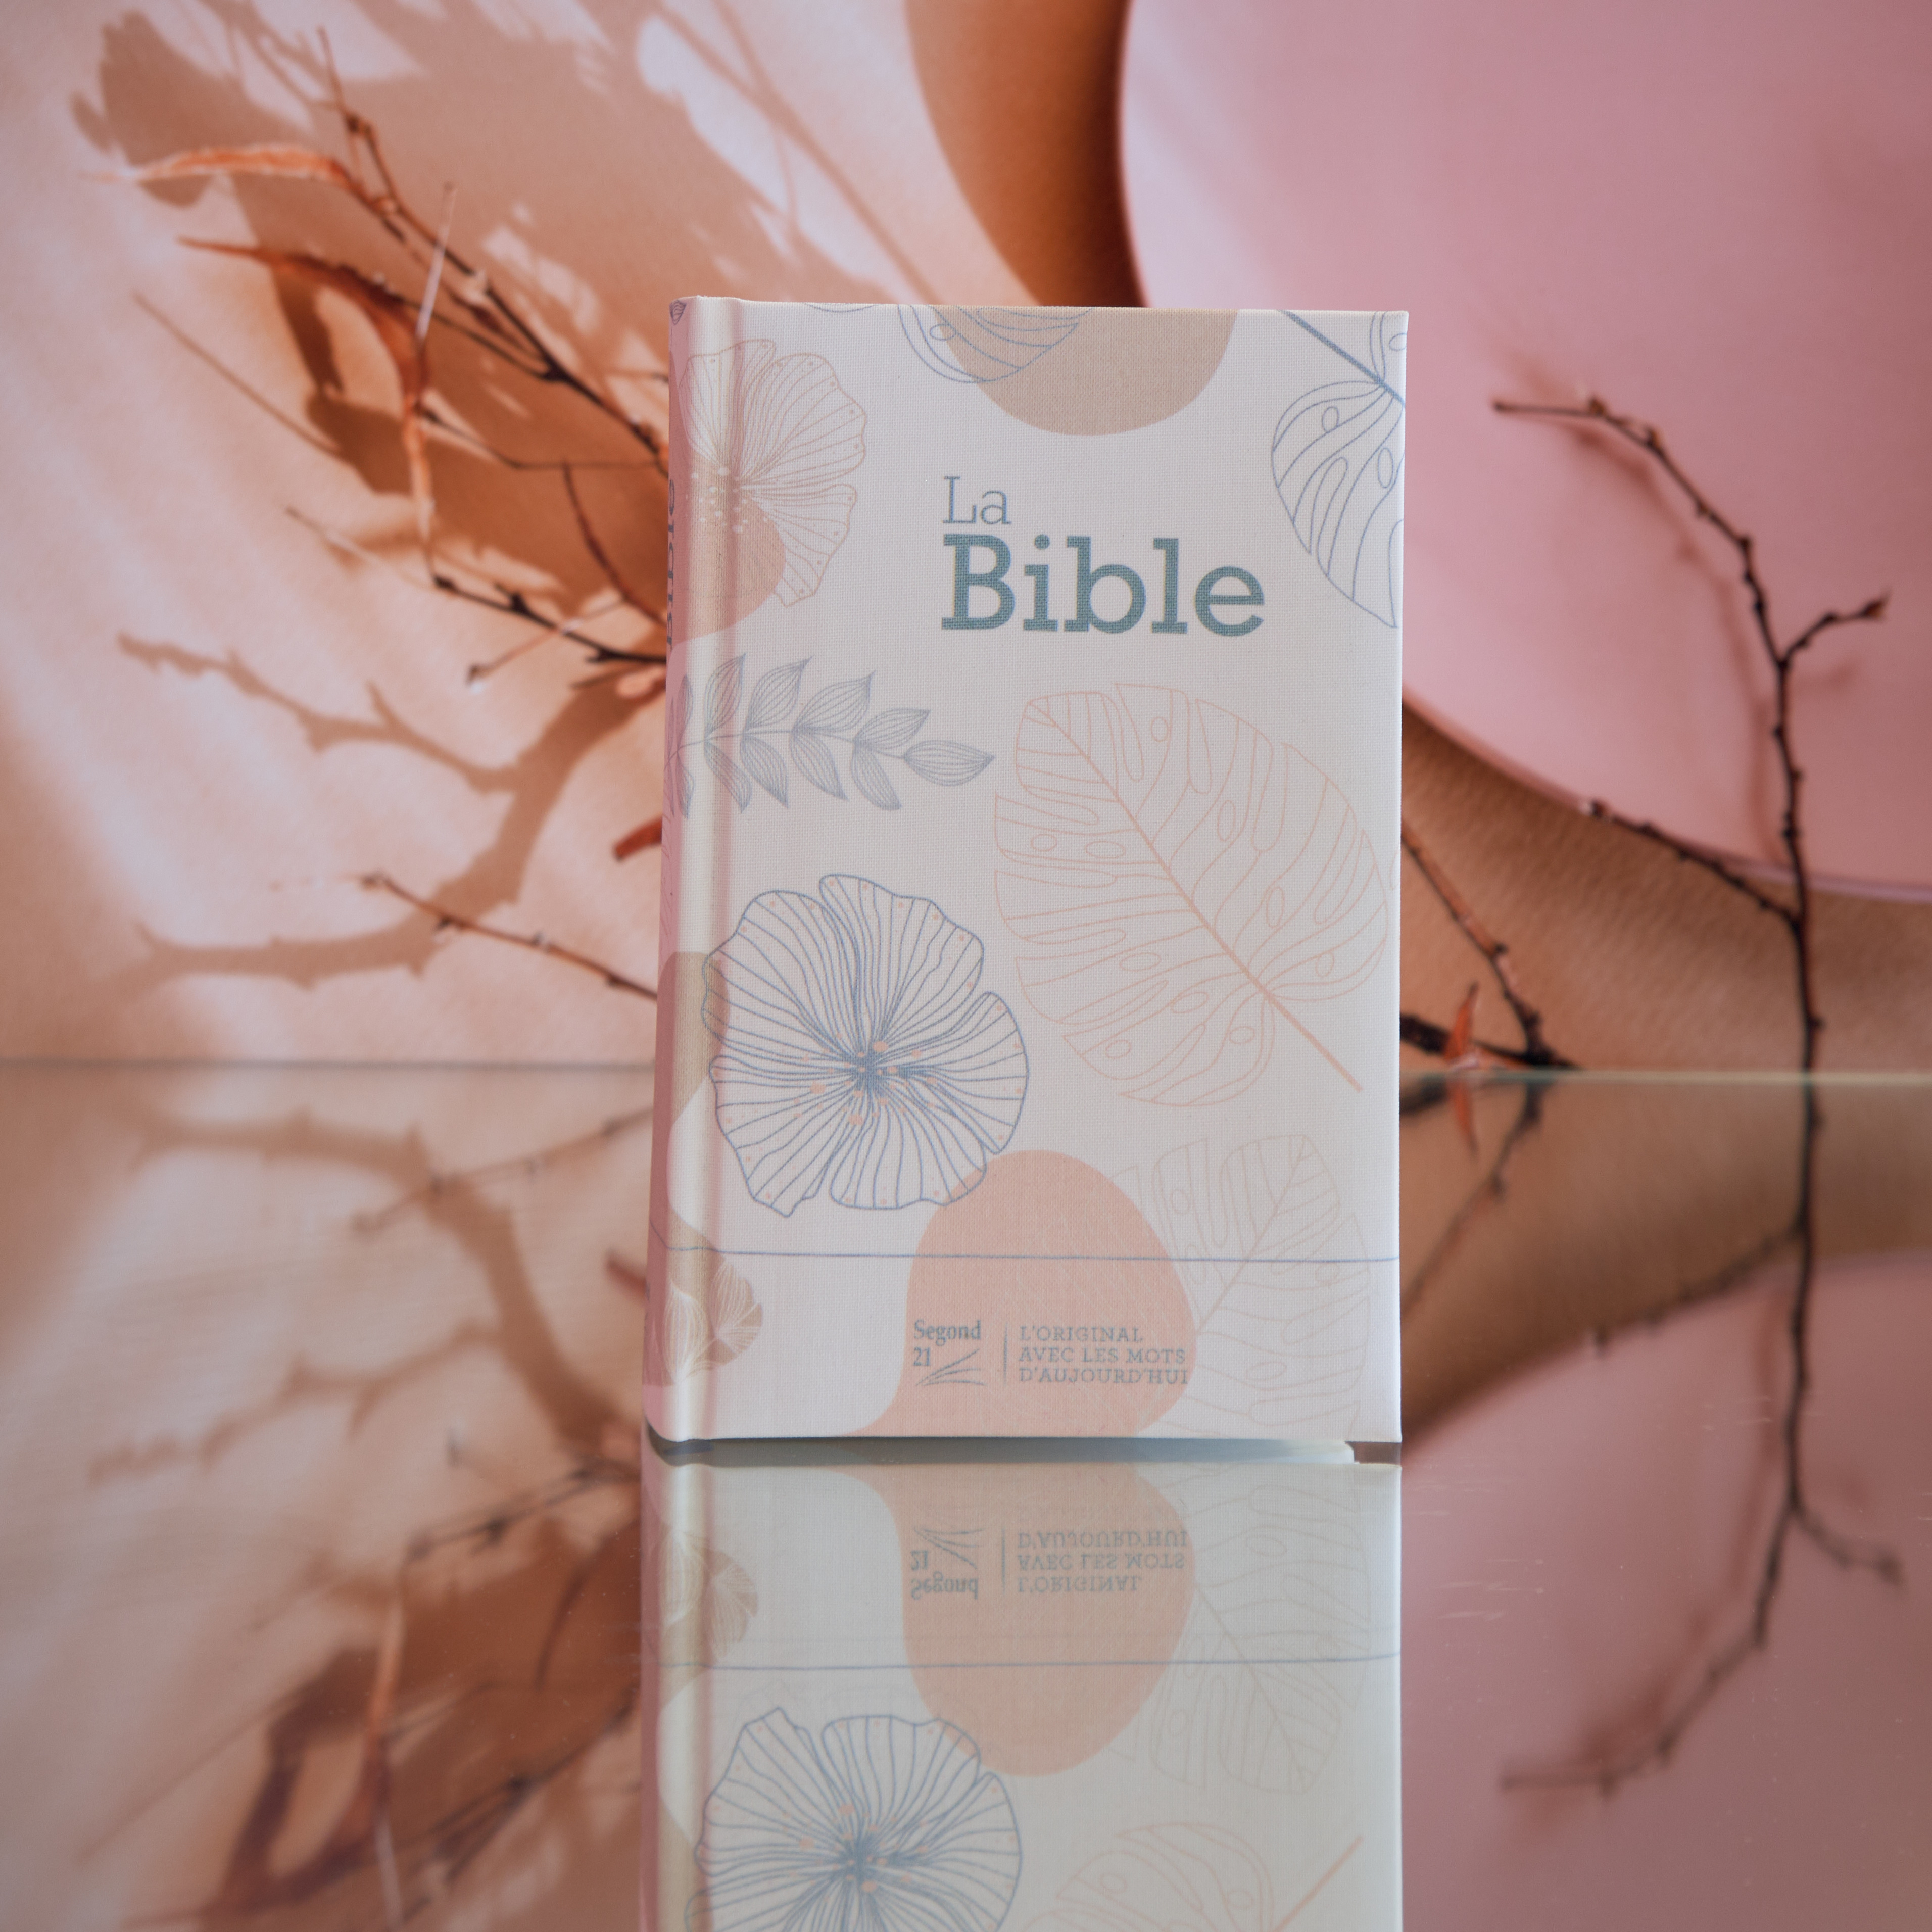 BIBLE SEGOND 21 COMPACTE "PREMIUM STYLE" TOILEE MATELASSEE  MOTIF FLEUILLE - RIGIDE